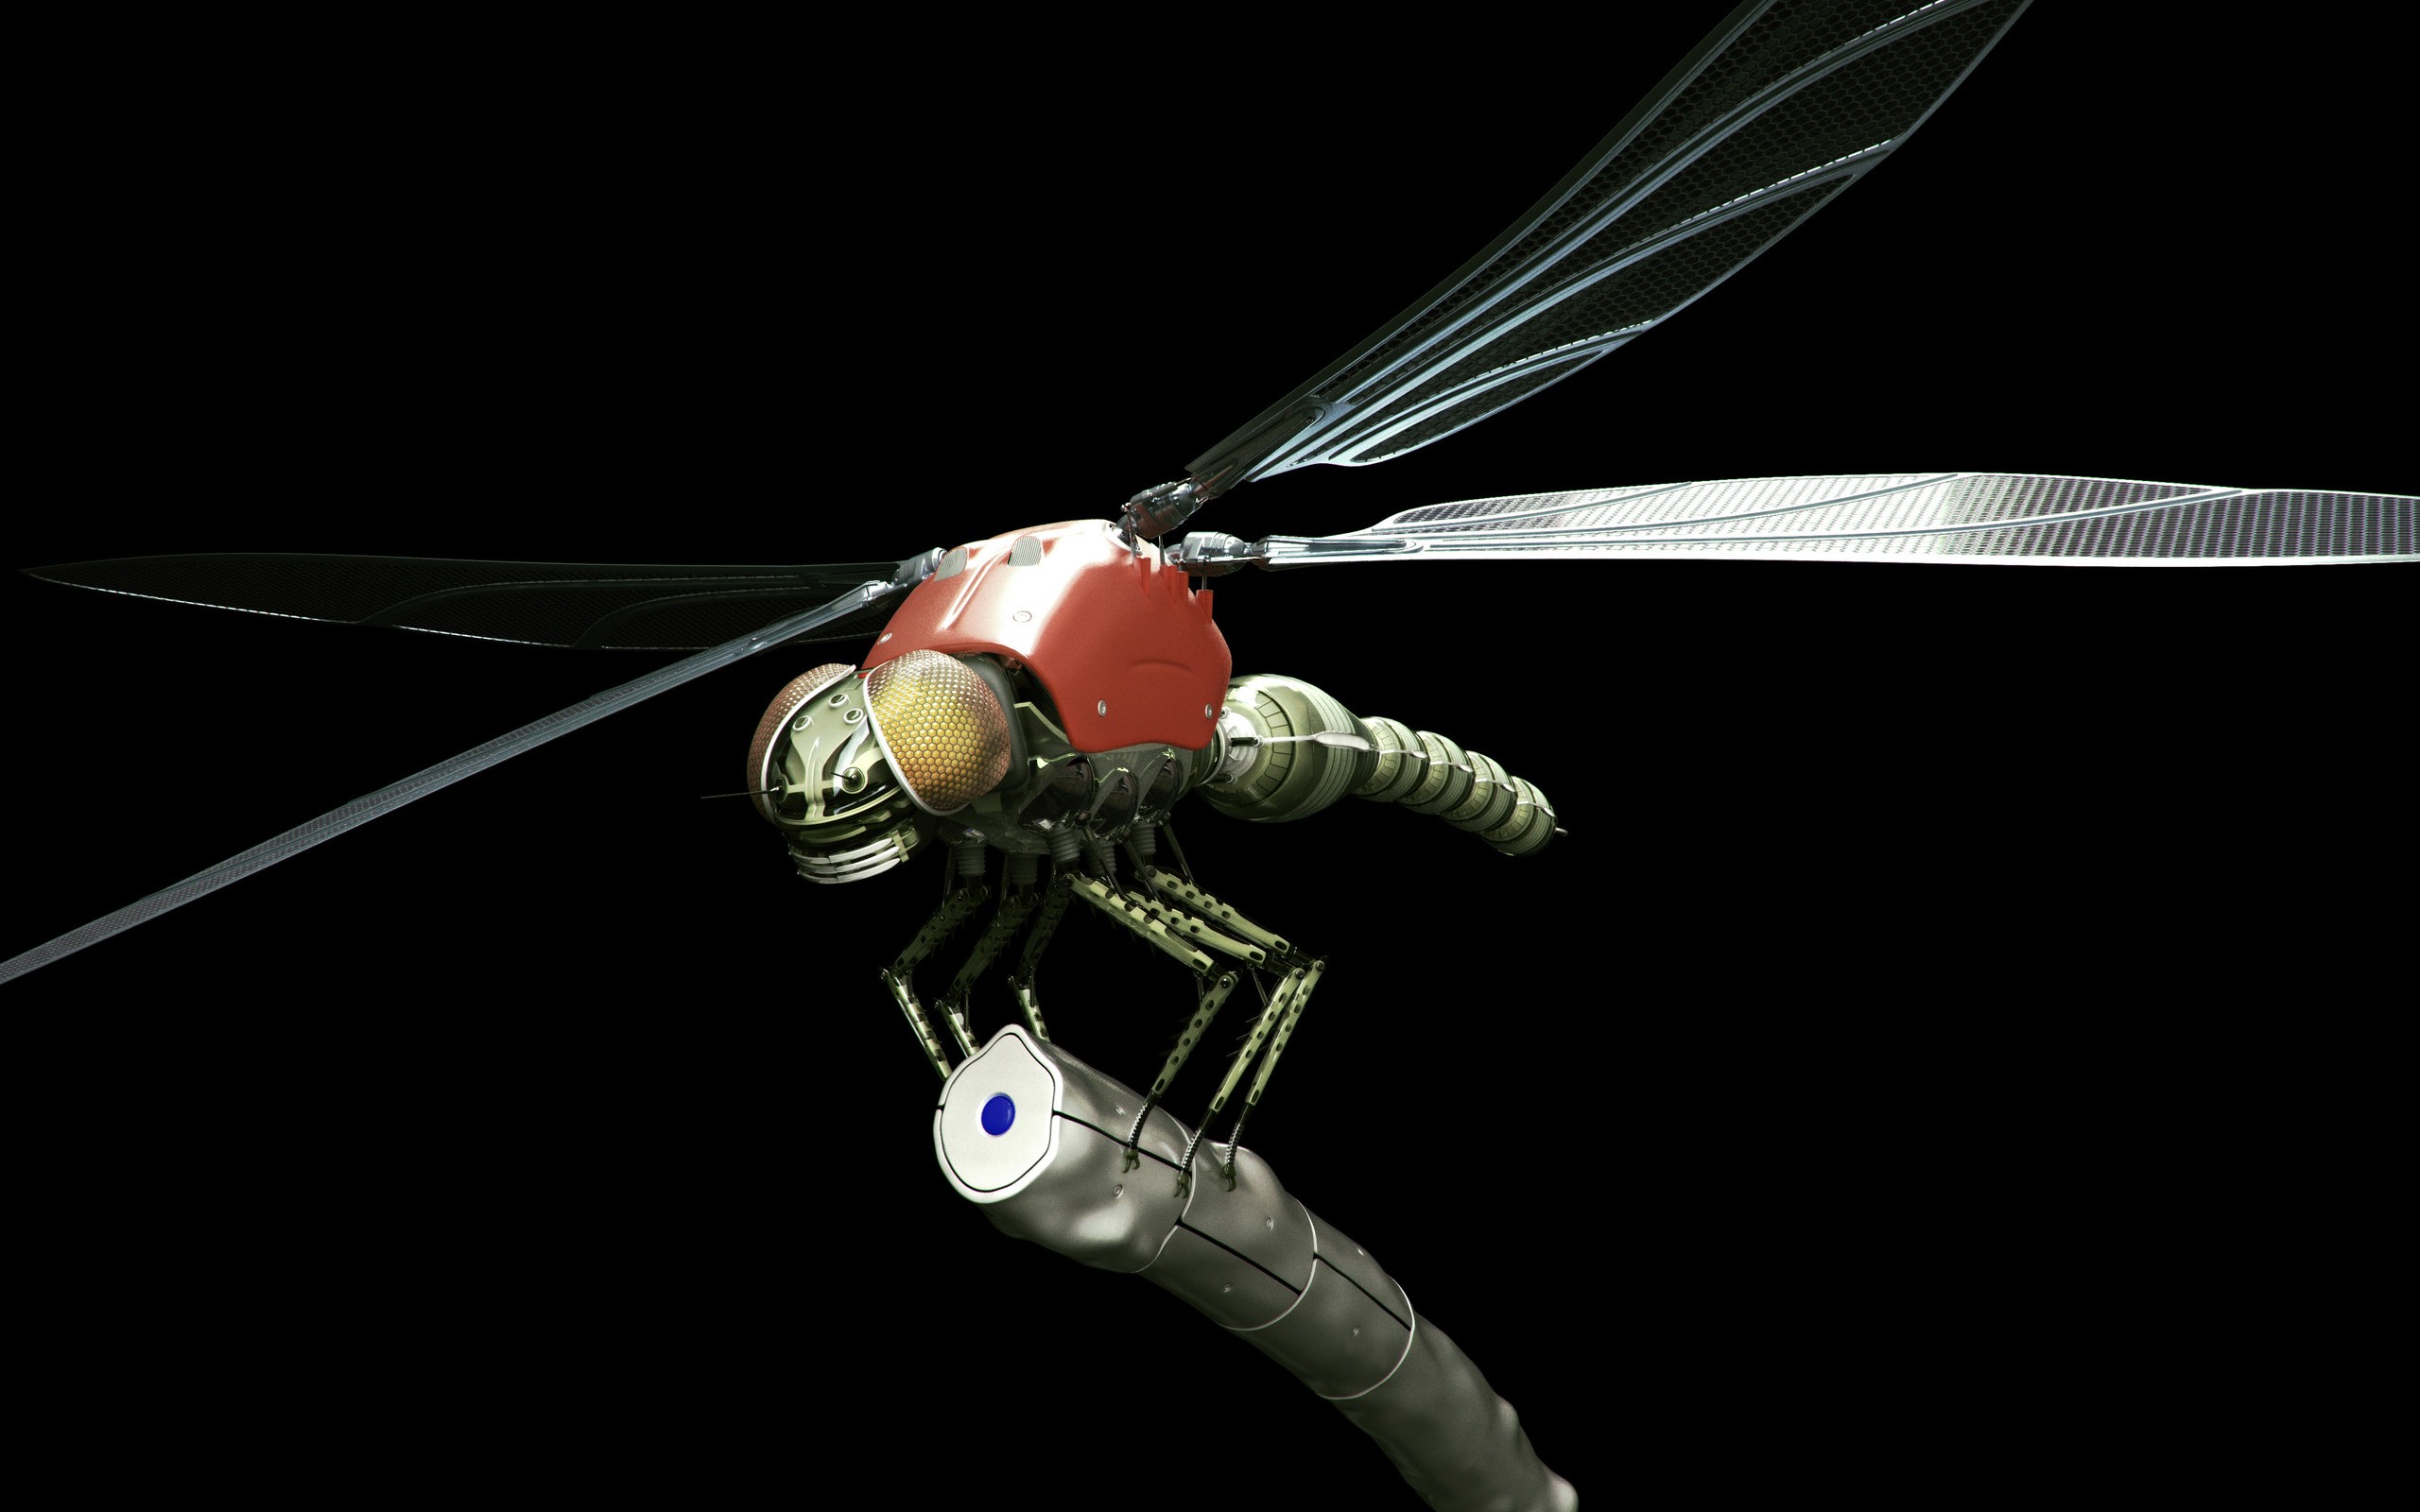 General 2560x1600 dragonflies robot render CGI black background simple background machine